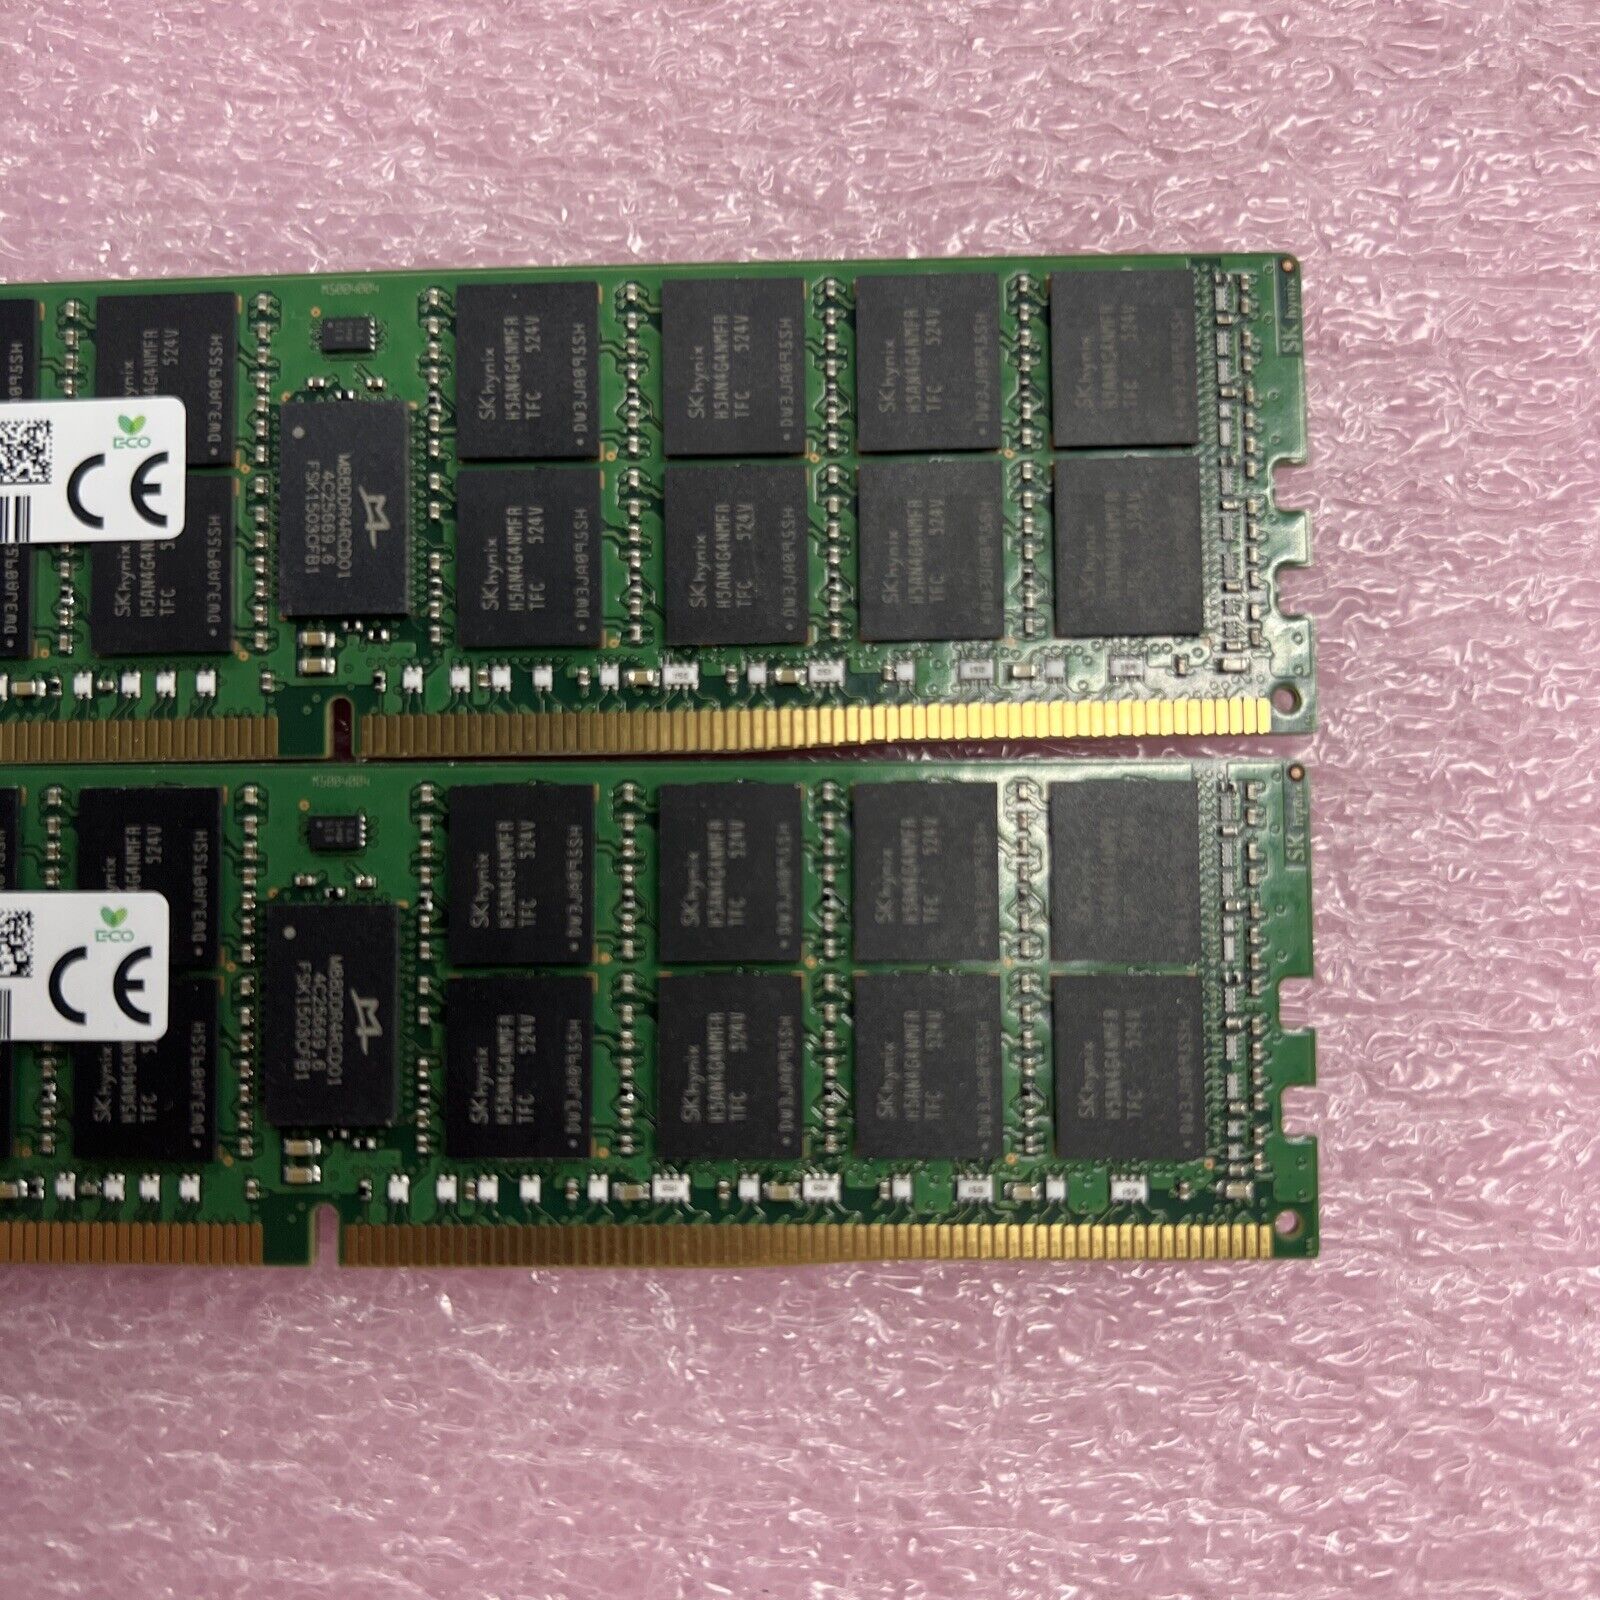 32GB Kit SK Hynix 2x 16GB 2Rx4 PC4-2133P-RA0-10 HMA42GR7MFR4N-TF DDR4 Server RAM